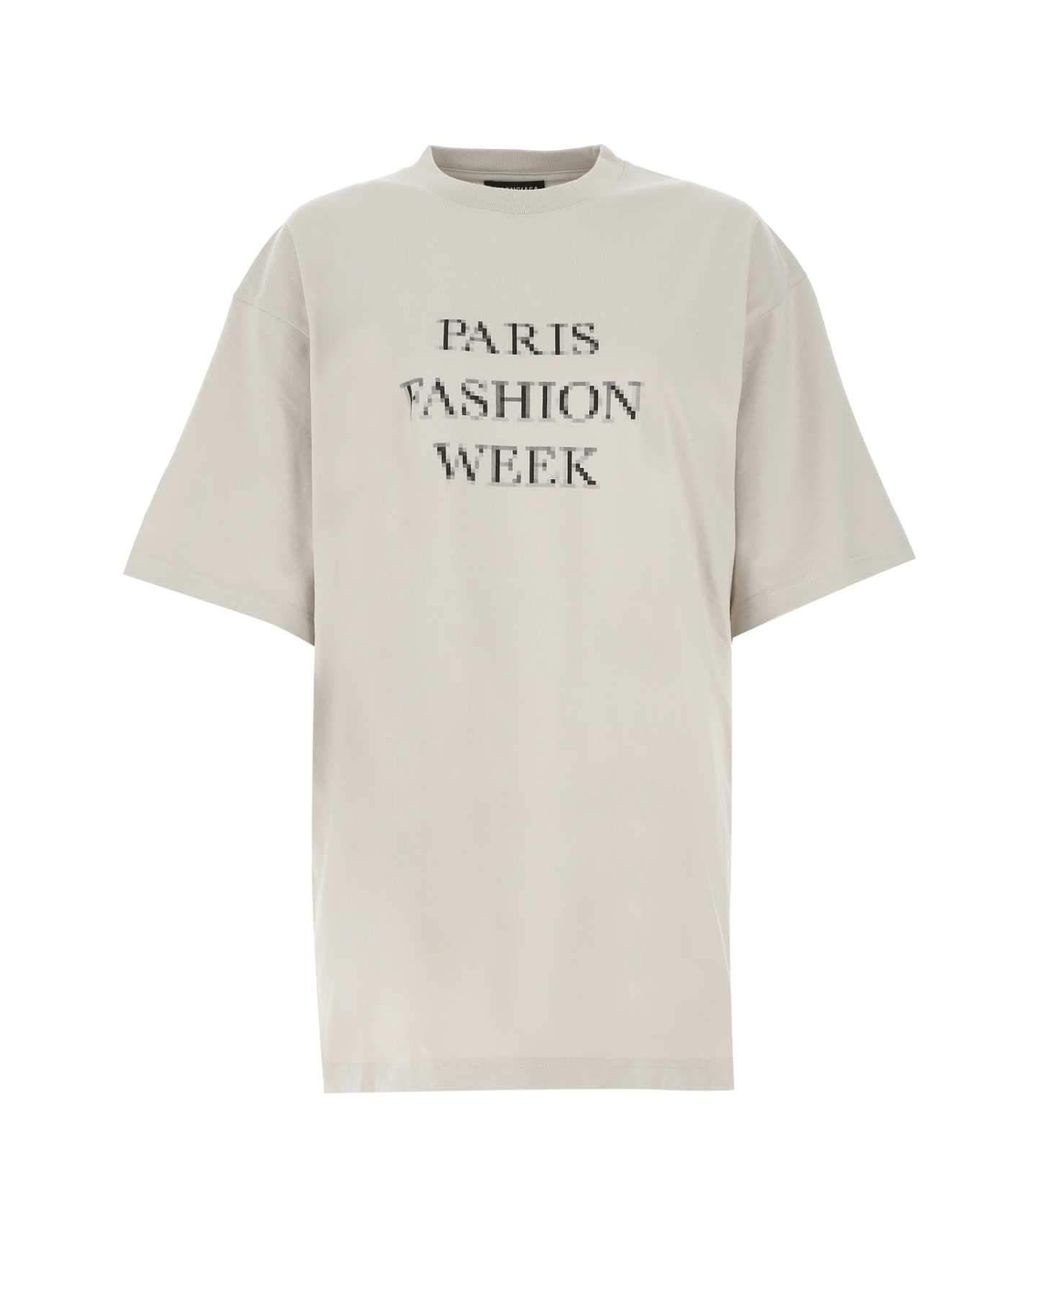 Men's Balenciaga T Shirt White/Beige color Size Small